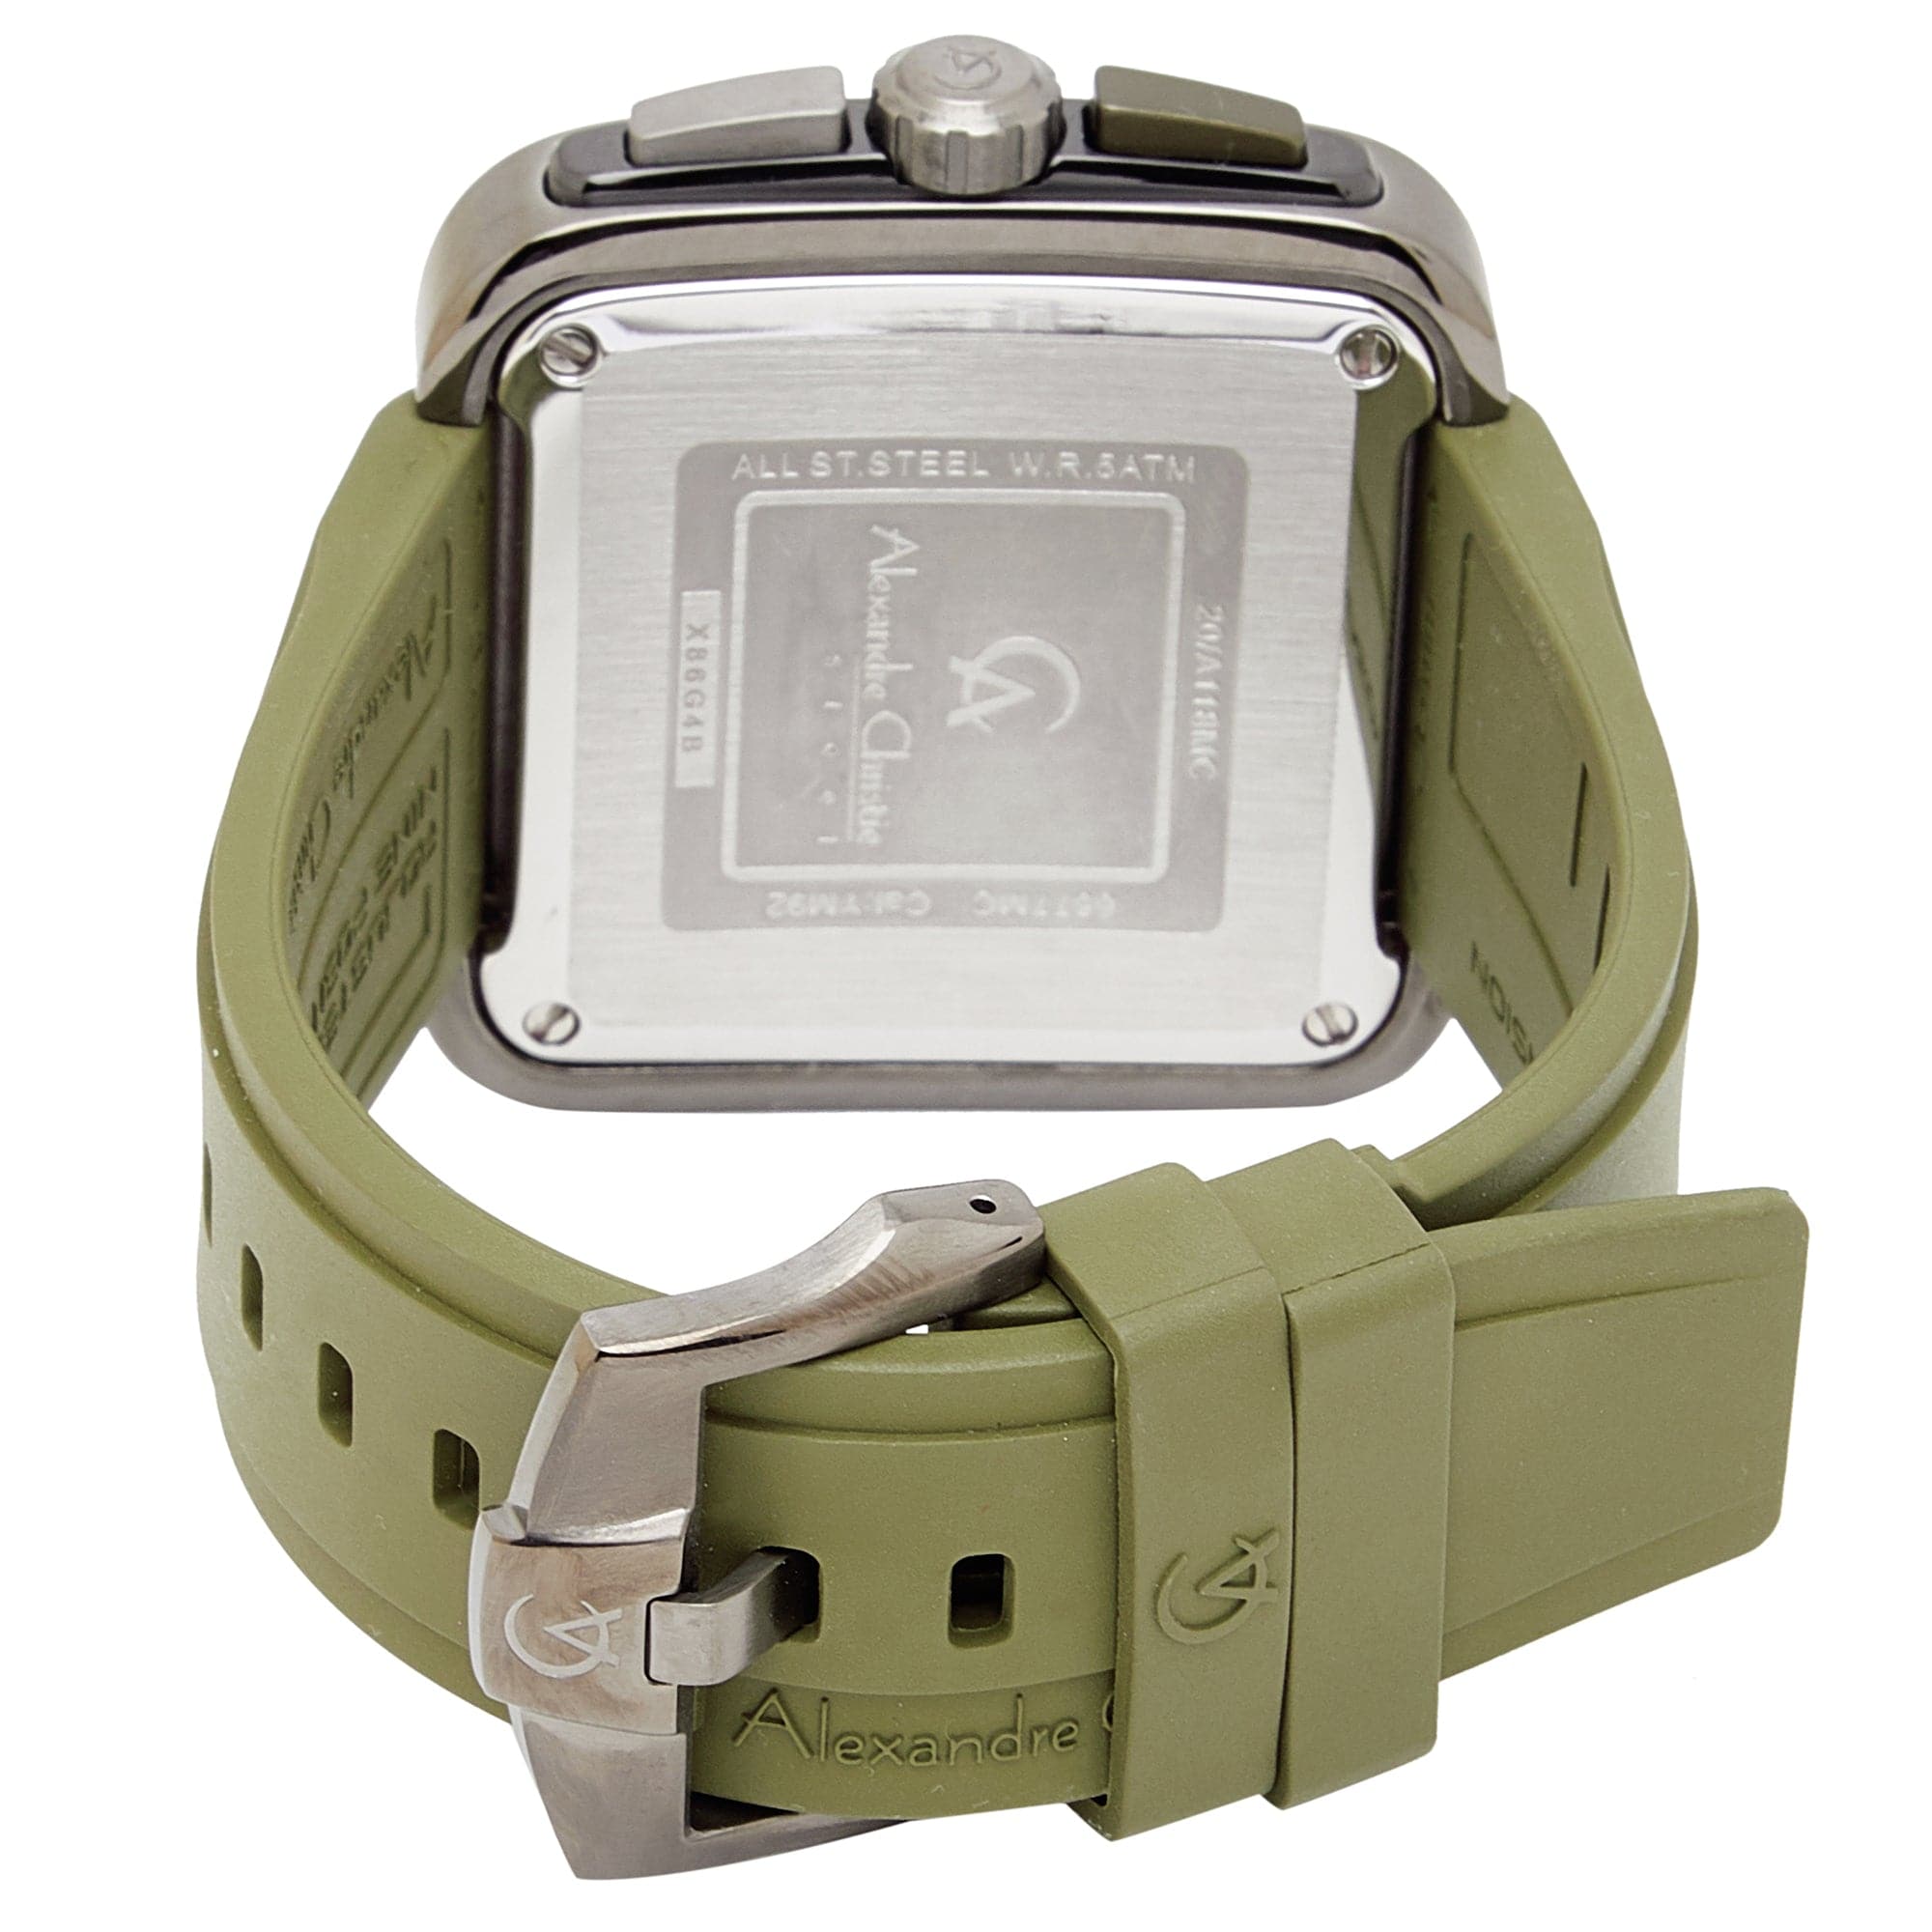 AC 6577 MCR Chronograph Watch For Men – Army Green - Kamal Watch Company